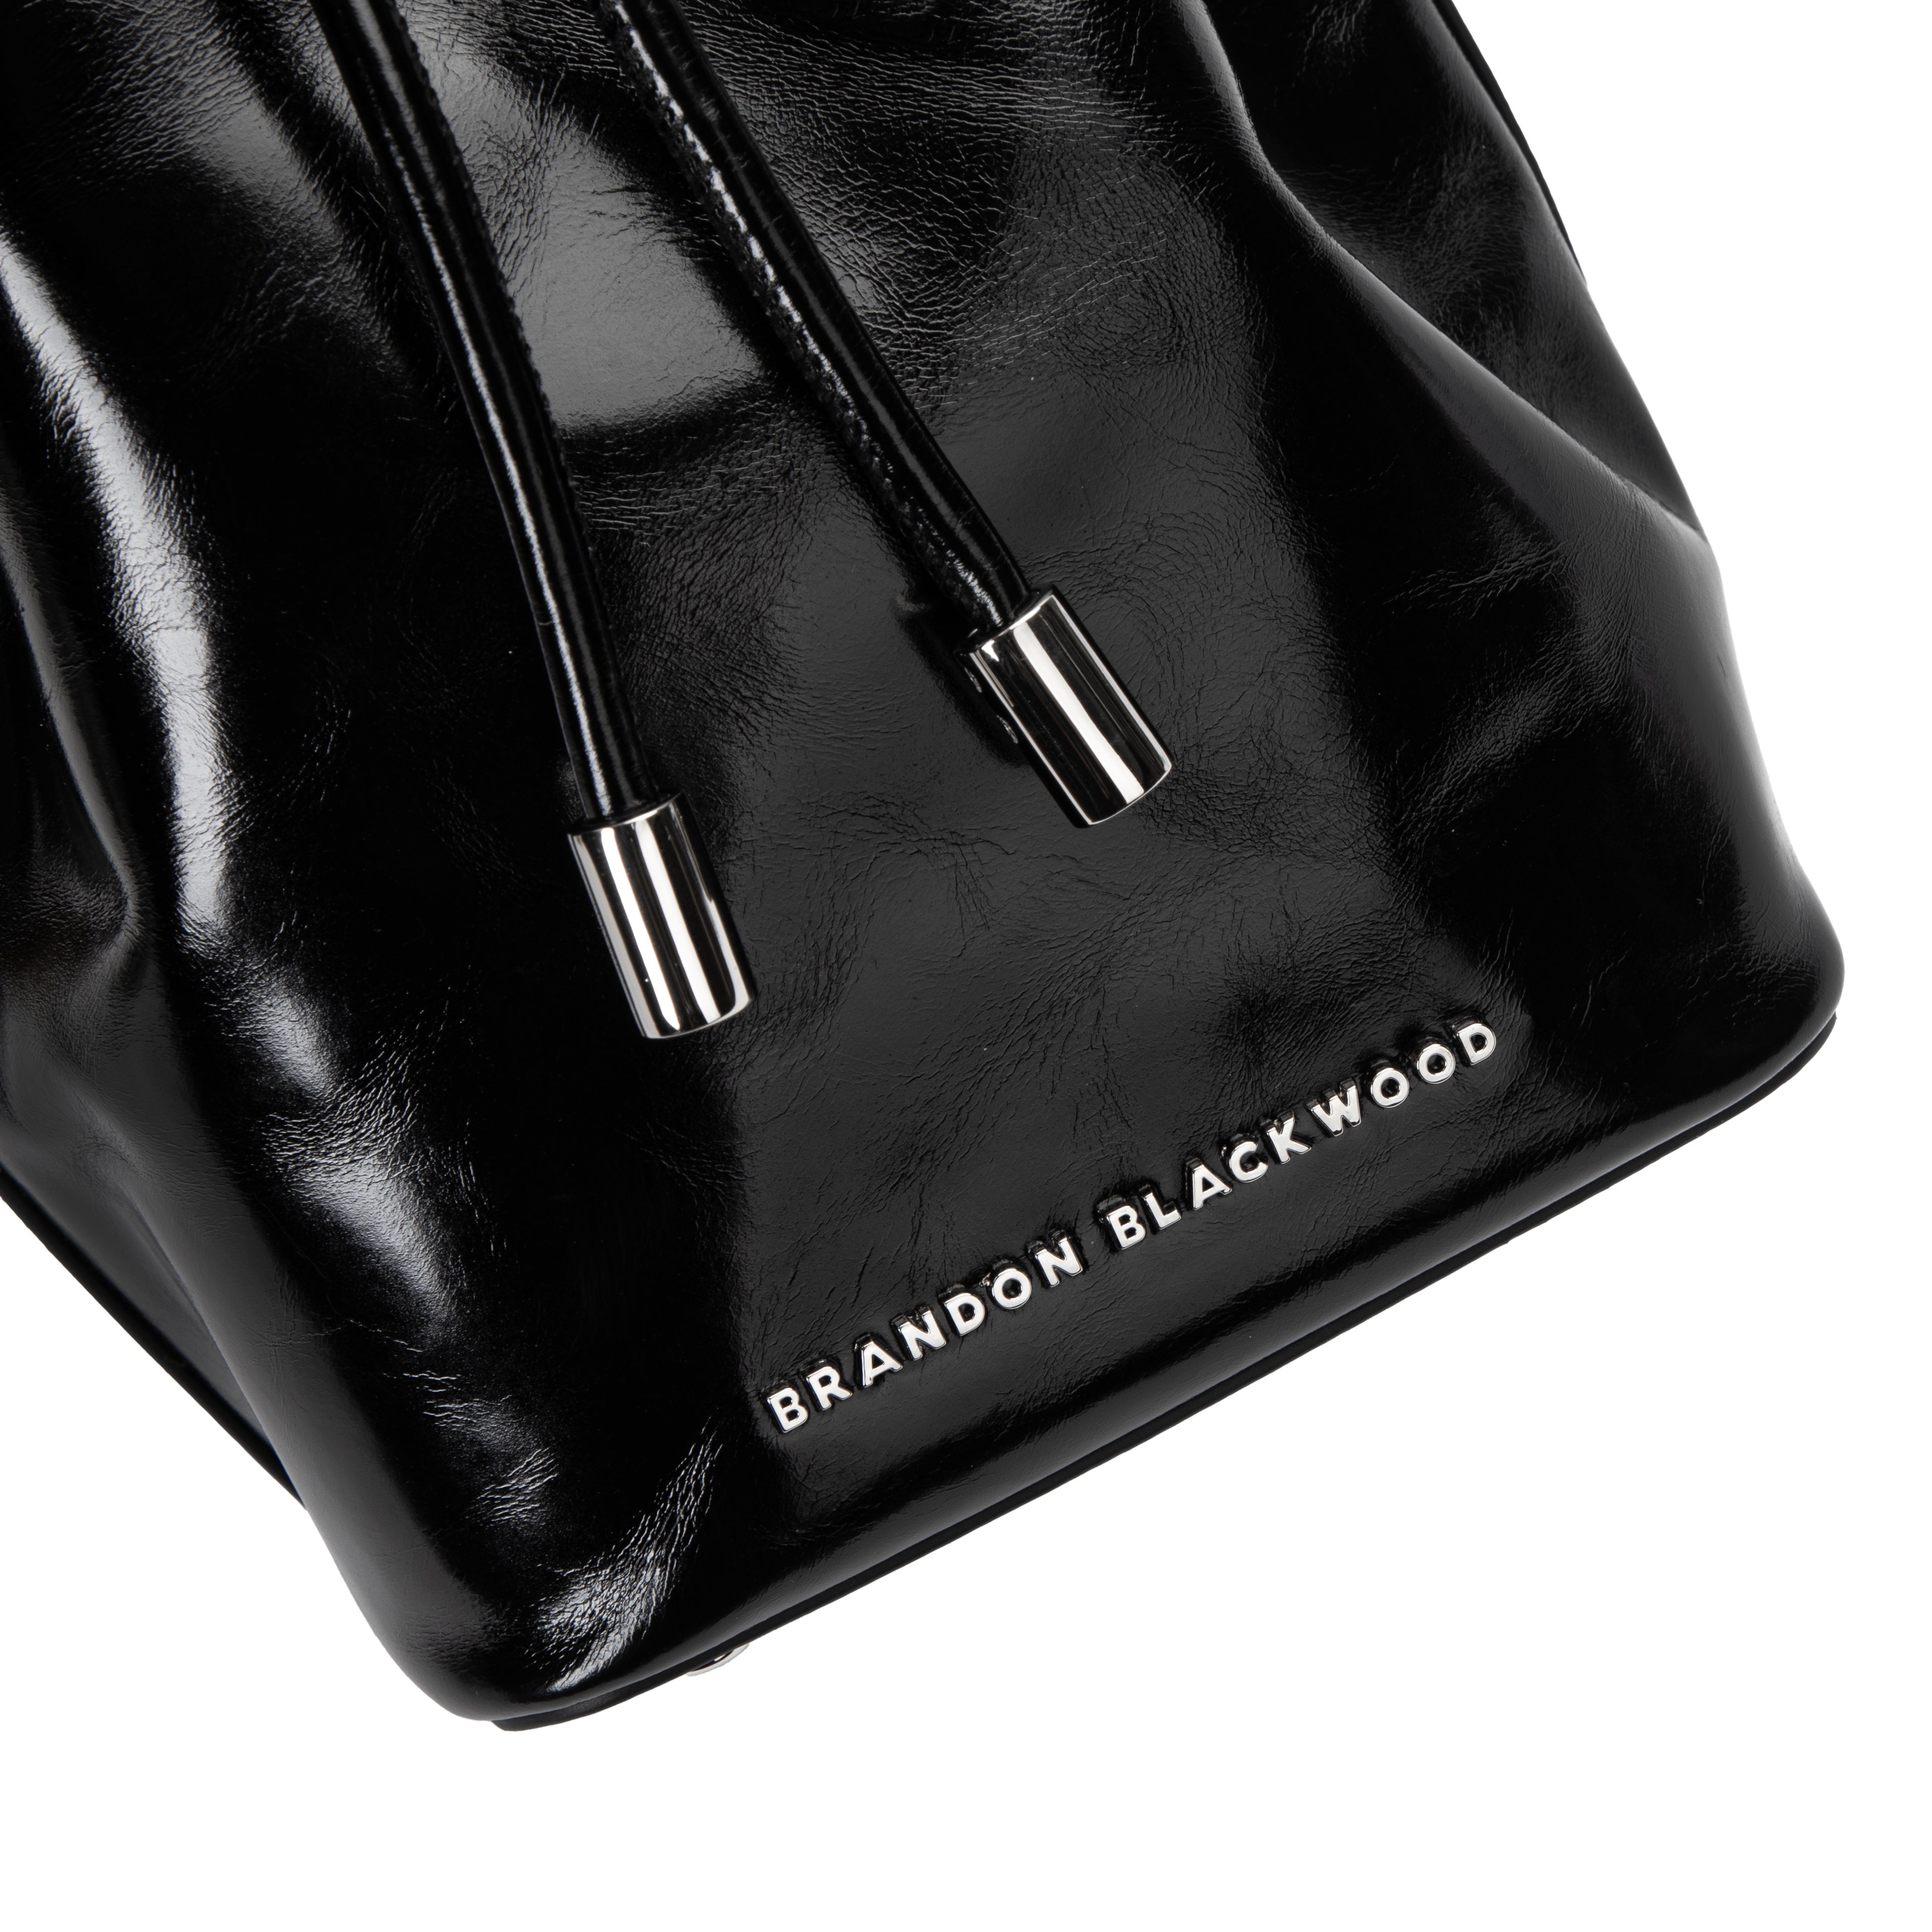 Brandon Blackwood New York - Corey Bucket Bag - Black Oil Leather w/ Silver